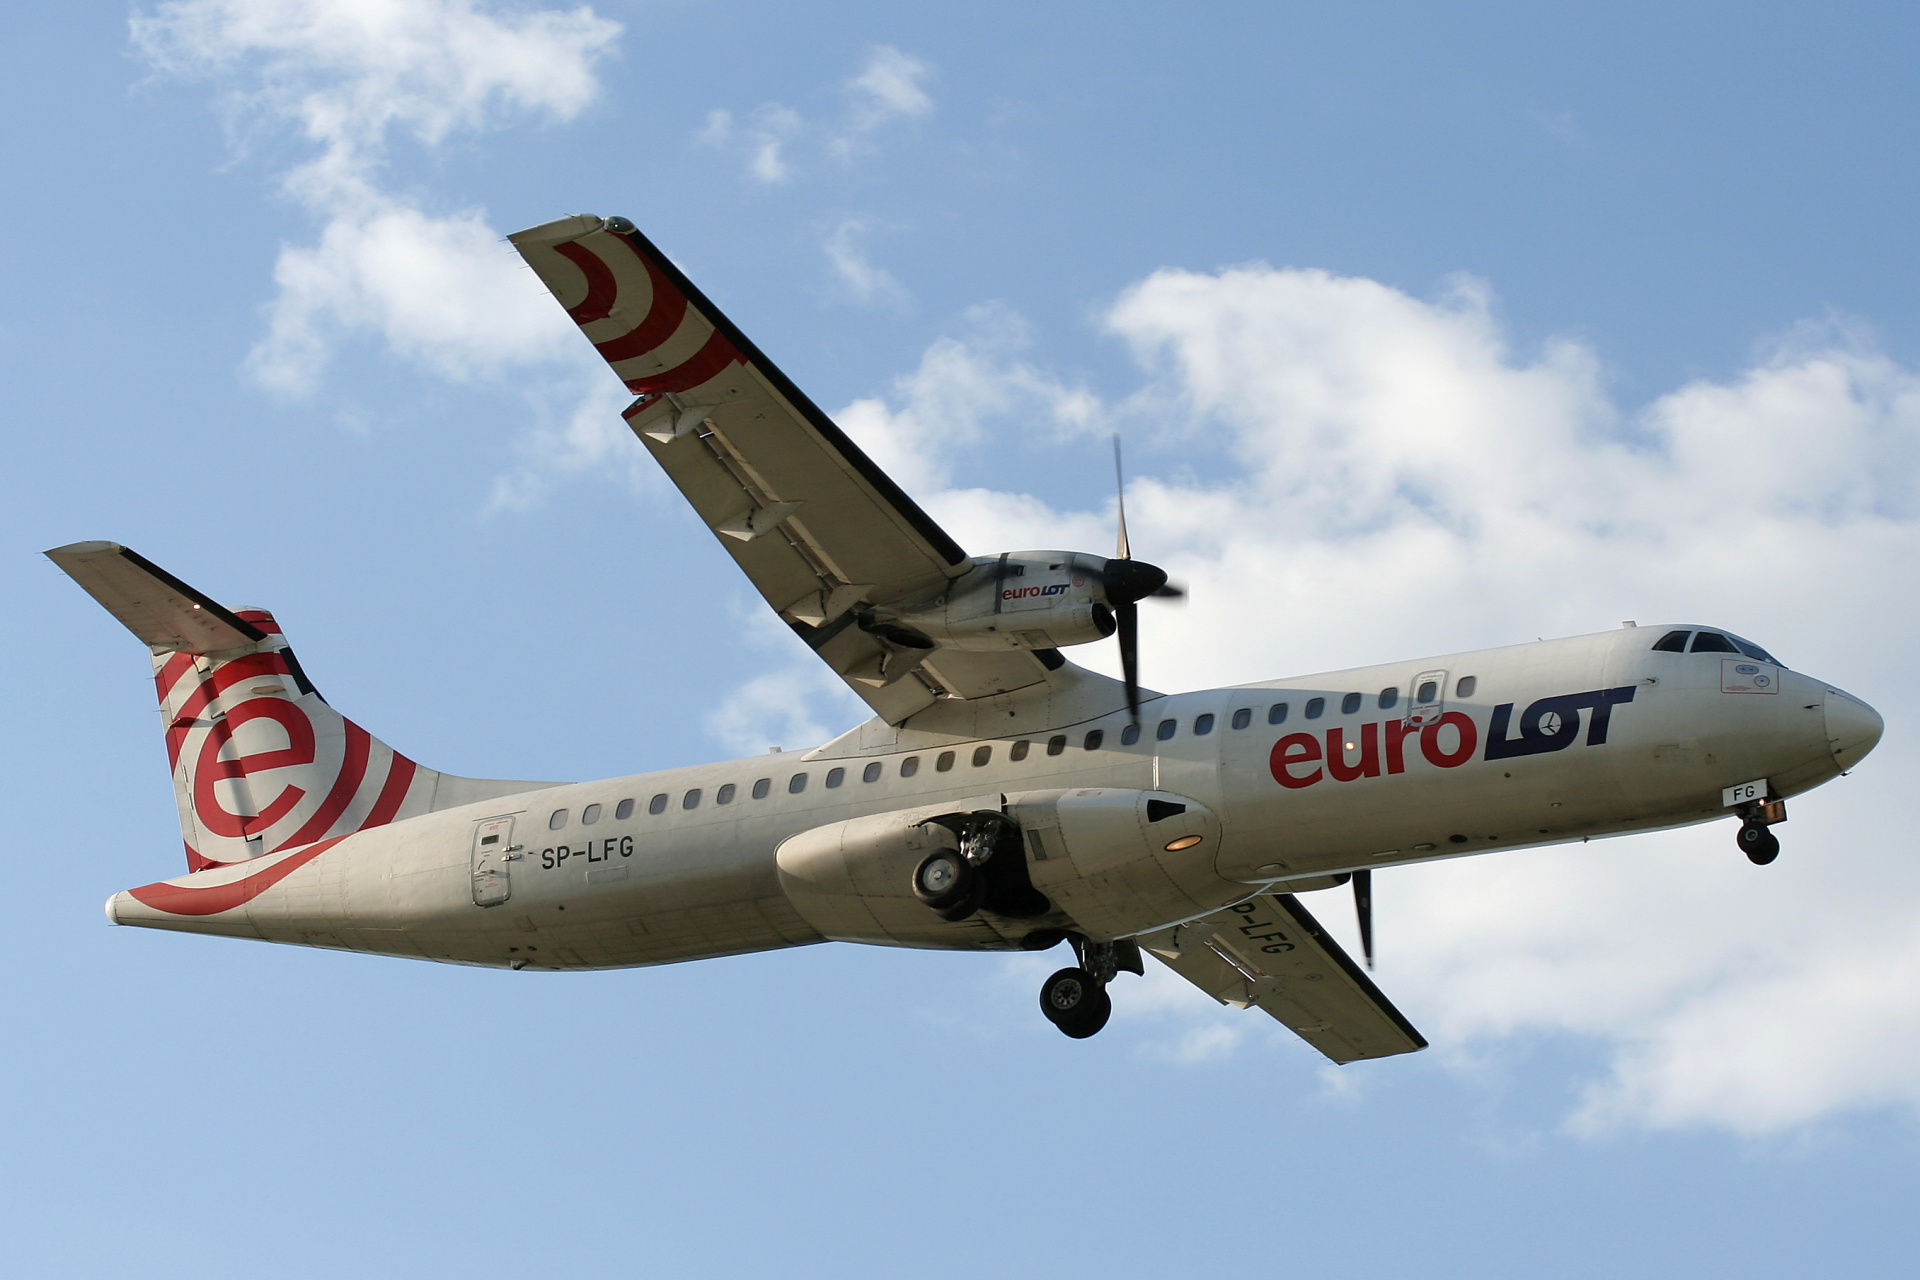 SP-LFG (Aircraft » EPWA Spotting » ATR 72 » EuroLOT)